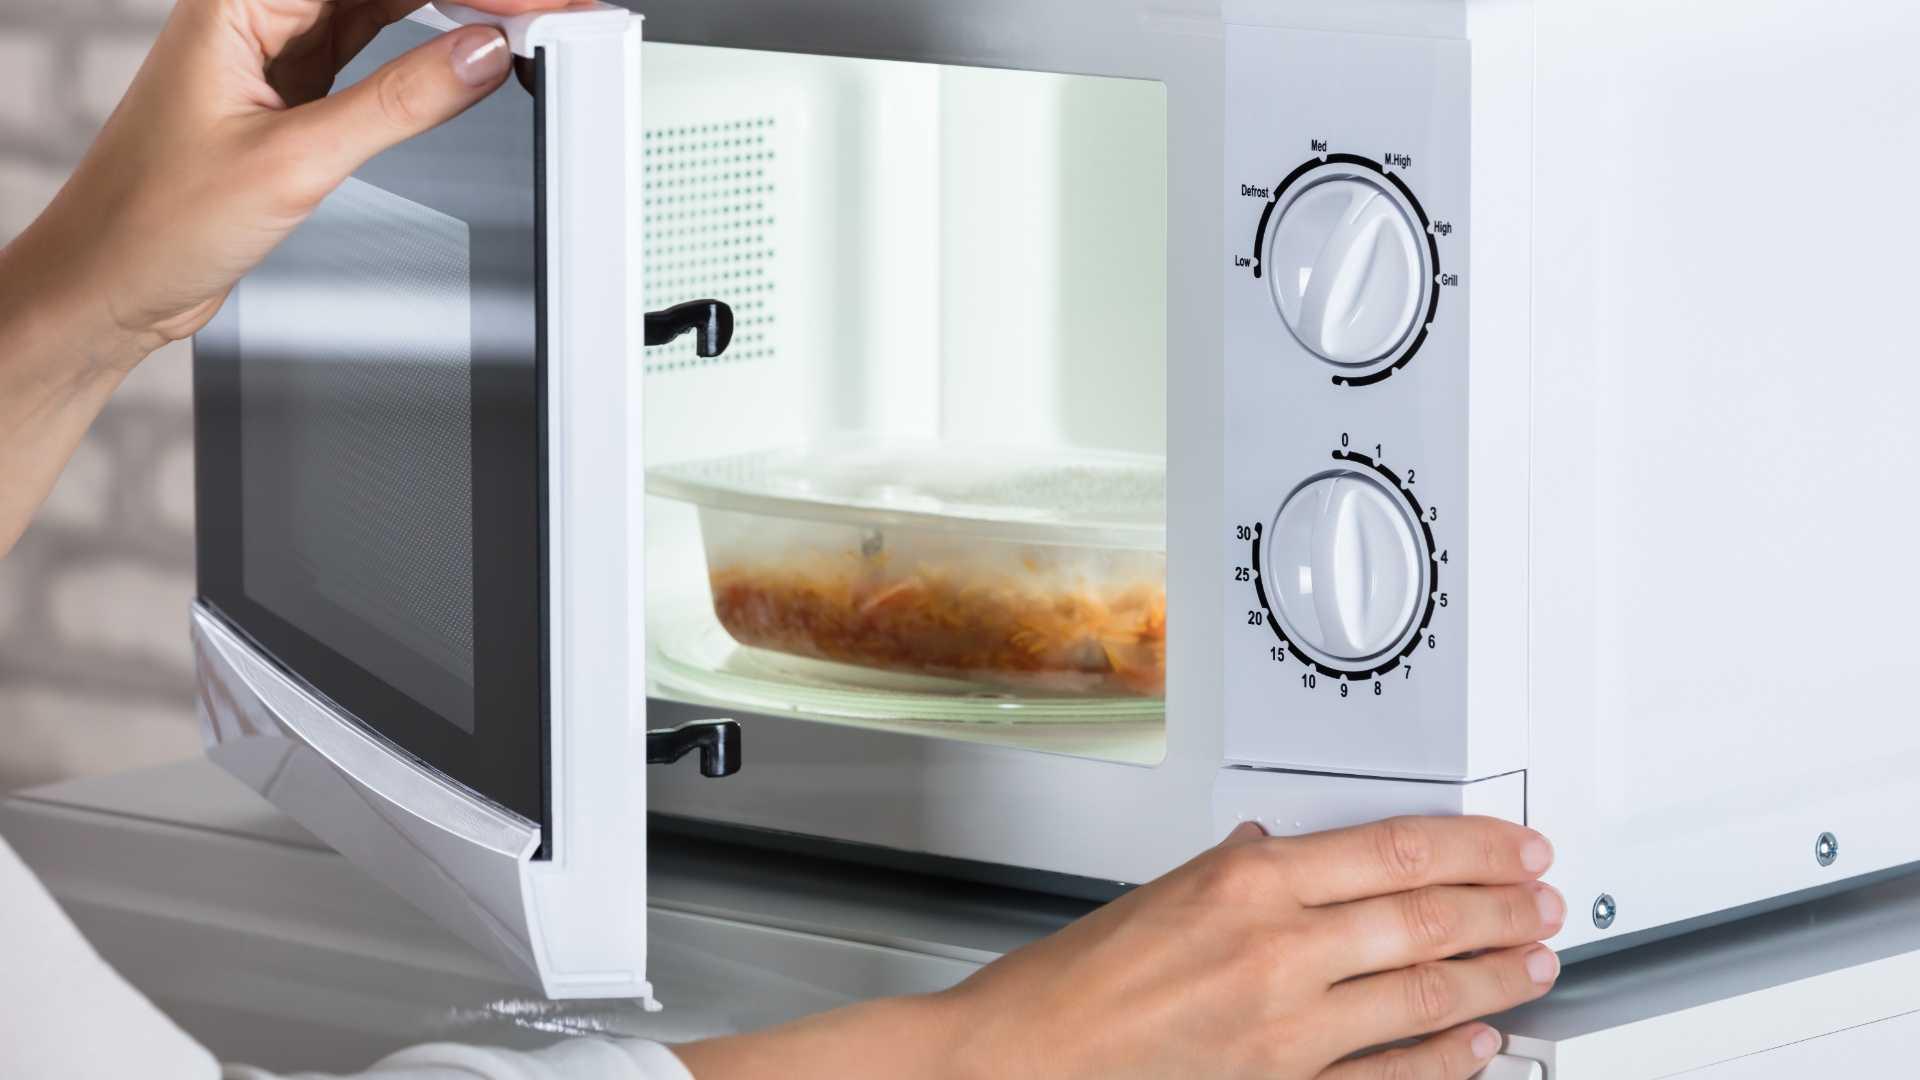 The debates around microwave cooking